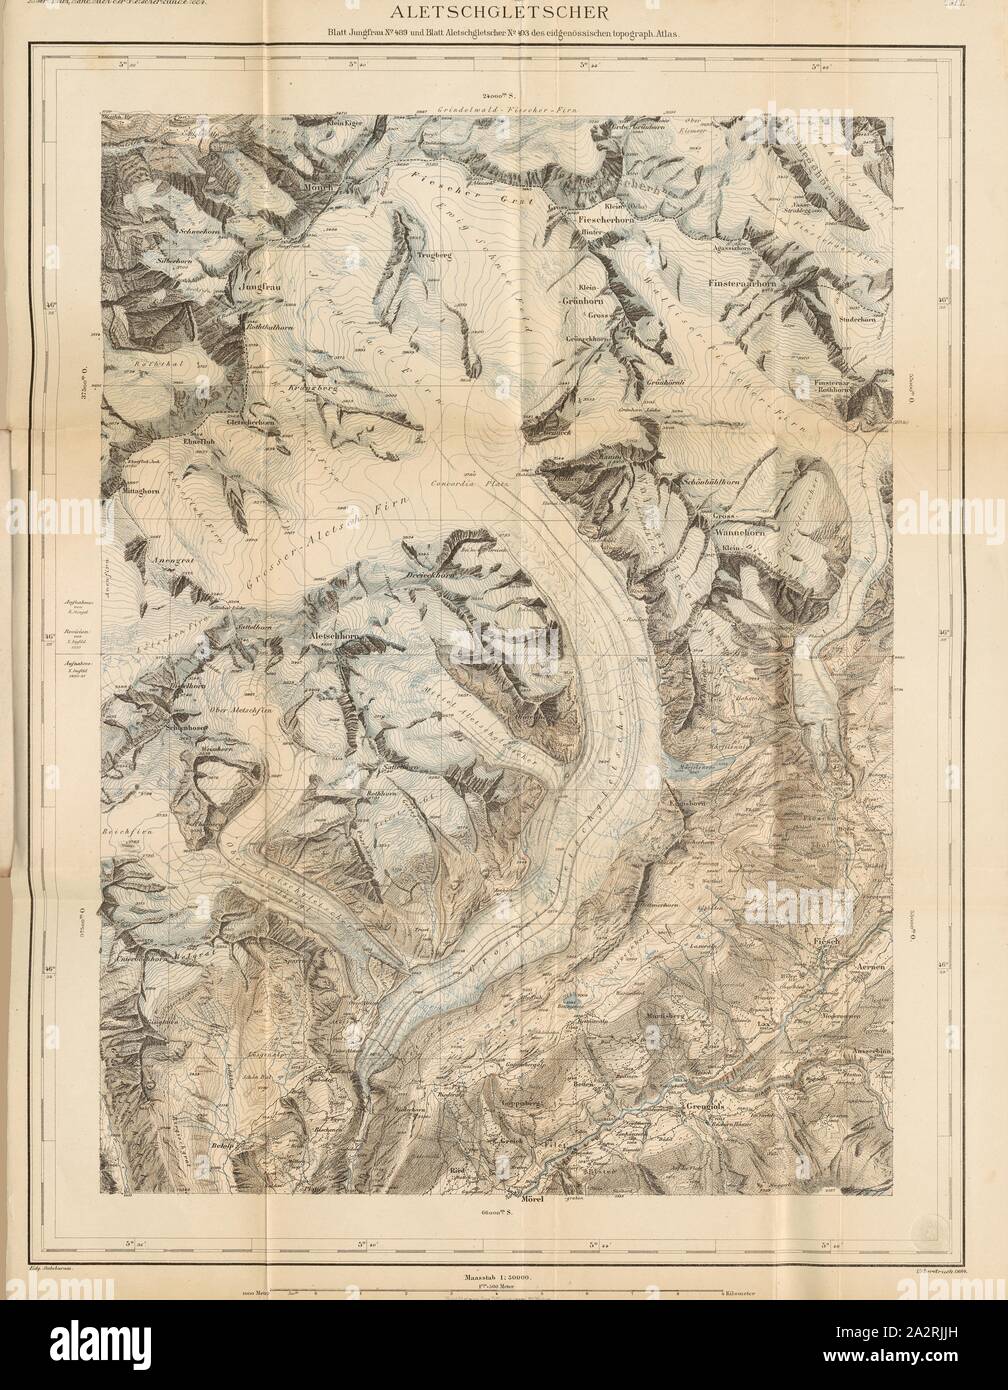 Aletschgletscher, Mapa del glaciar Aletsch desde el siglo XIX, la placa I, pág. 560, 1884, Albert Heim: Handbuch der Gletscherkunde. Stuttgart: Verlag von J. Engelhorn, 1885 Foto de stock